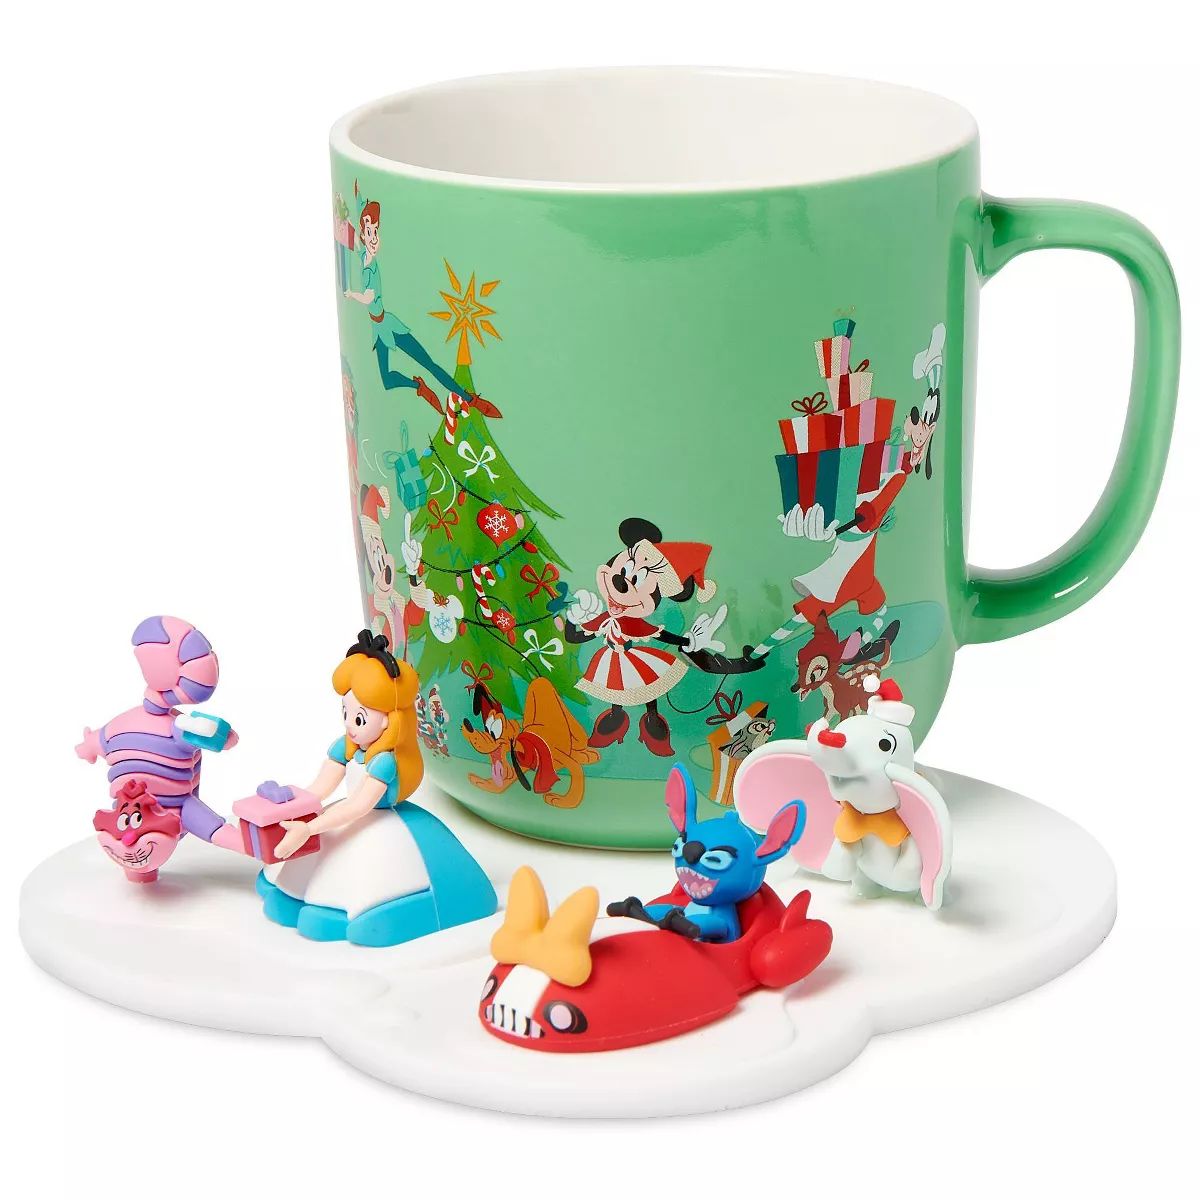 Disney 15.5oz Mug with Coaster | Target